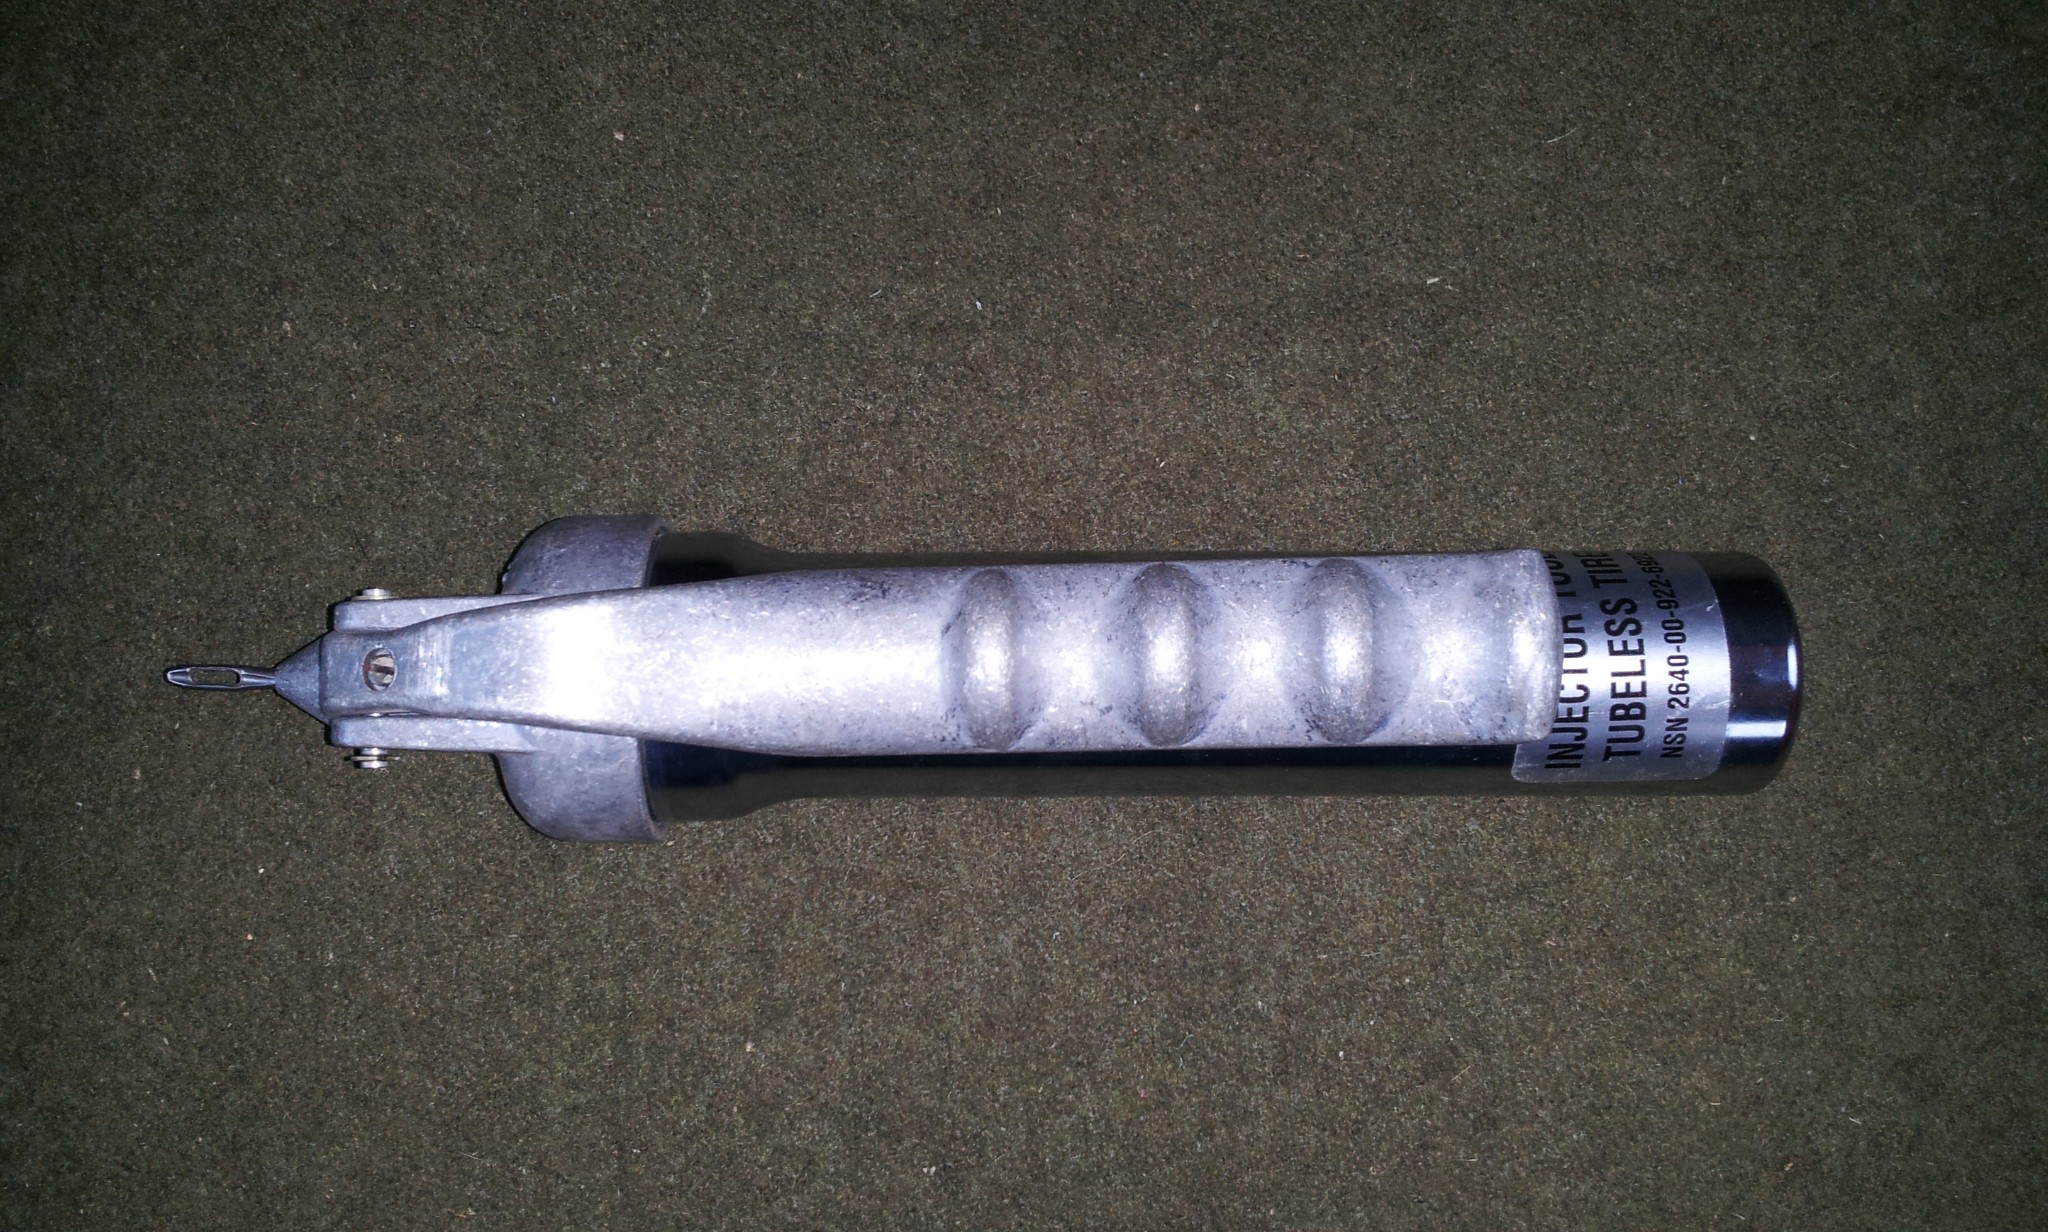 Tire repairing injector tool